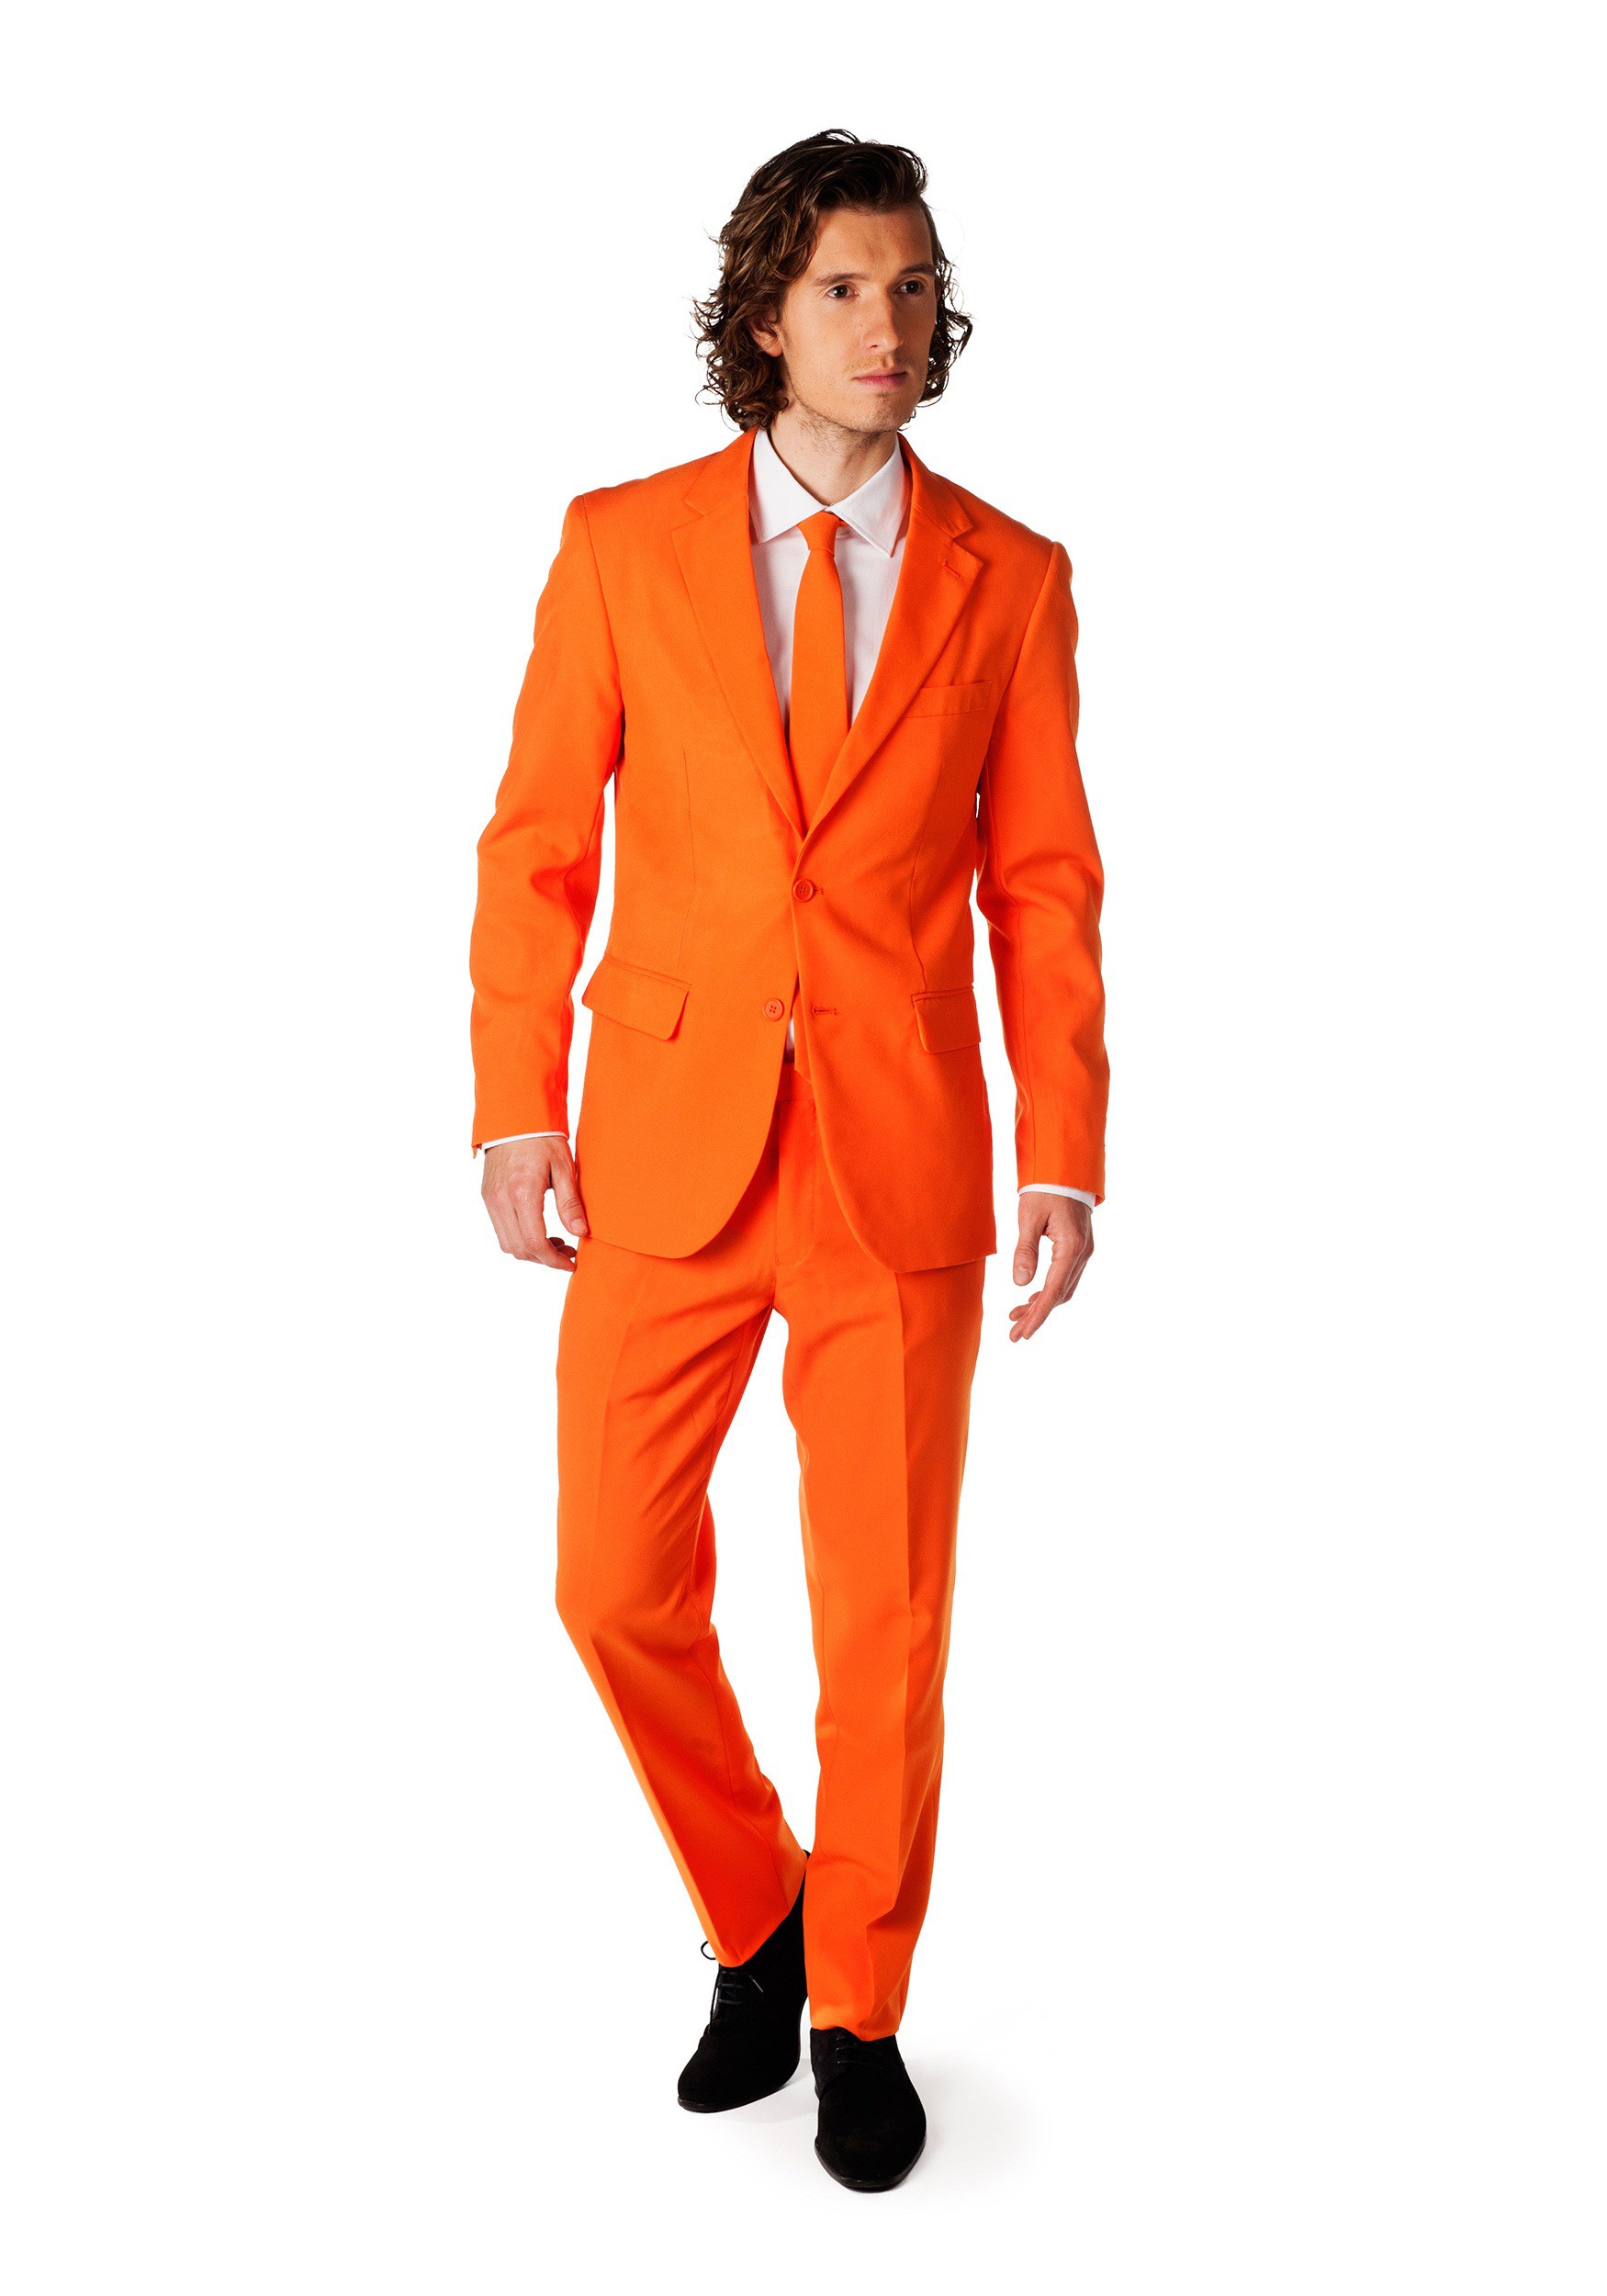 Image of OppoSuits Orange Costume Suit for Men ID OSOSUI0001-48